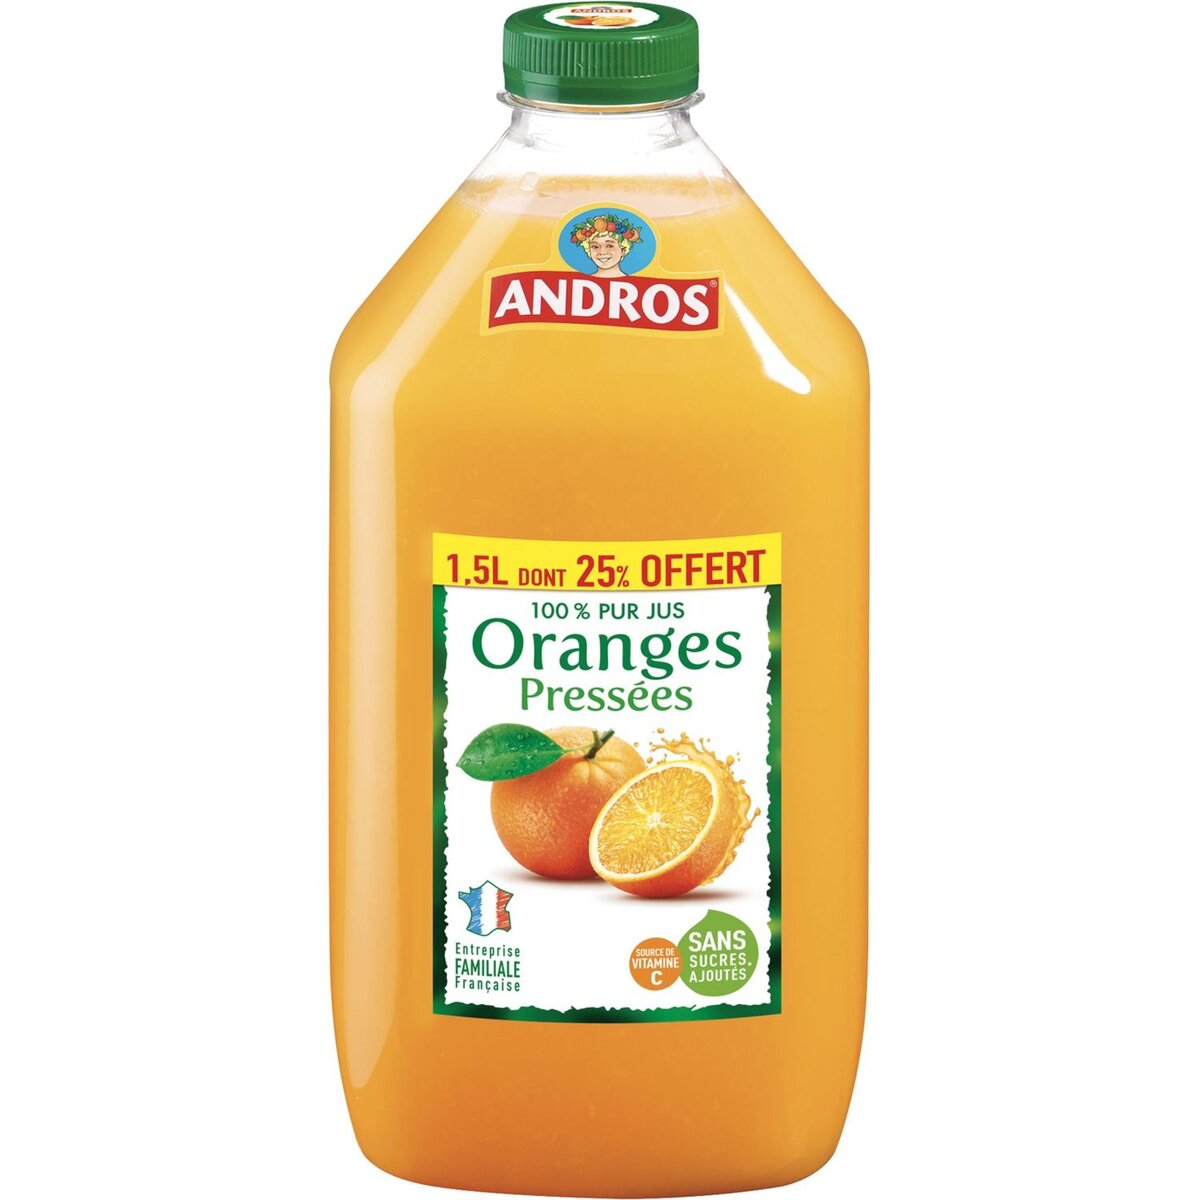 ANDROS Jus d'orange 1,5l dont 25% offert